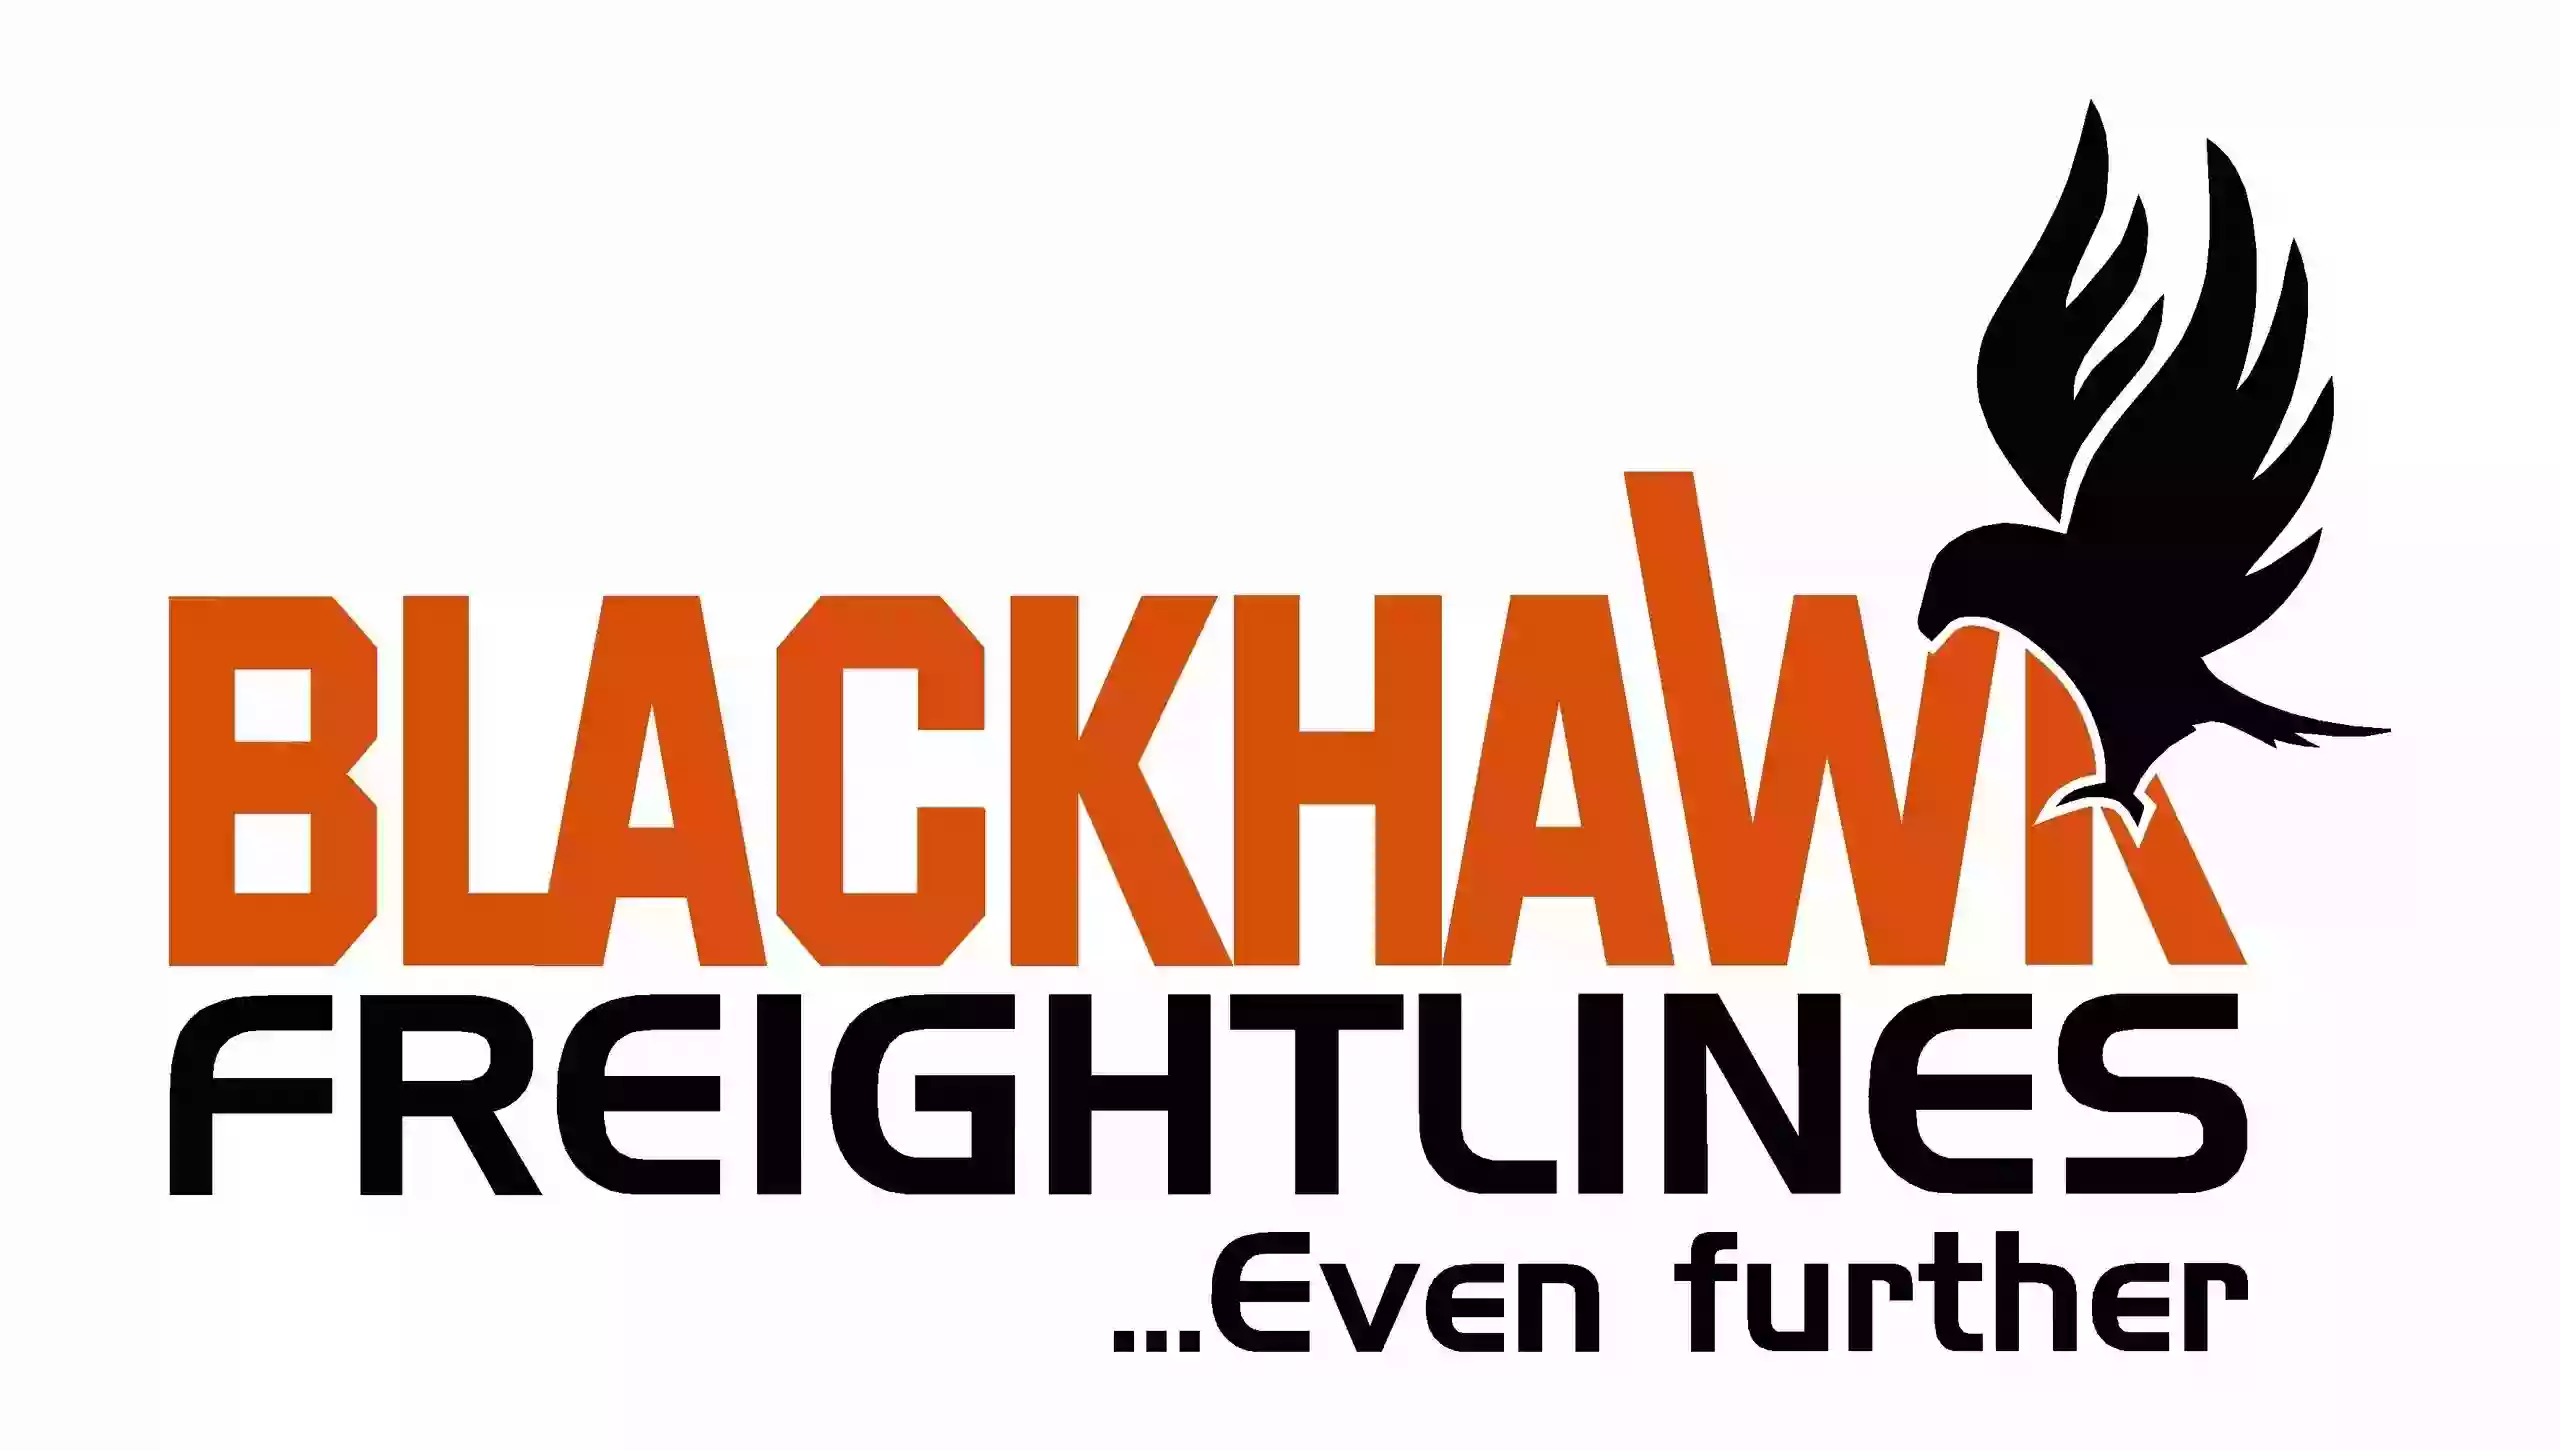 Blackhawk Freightlines